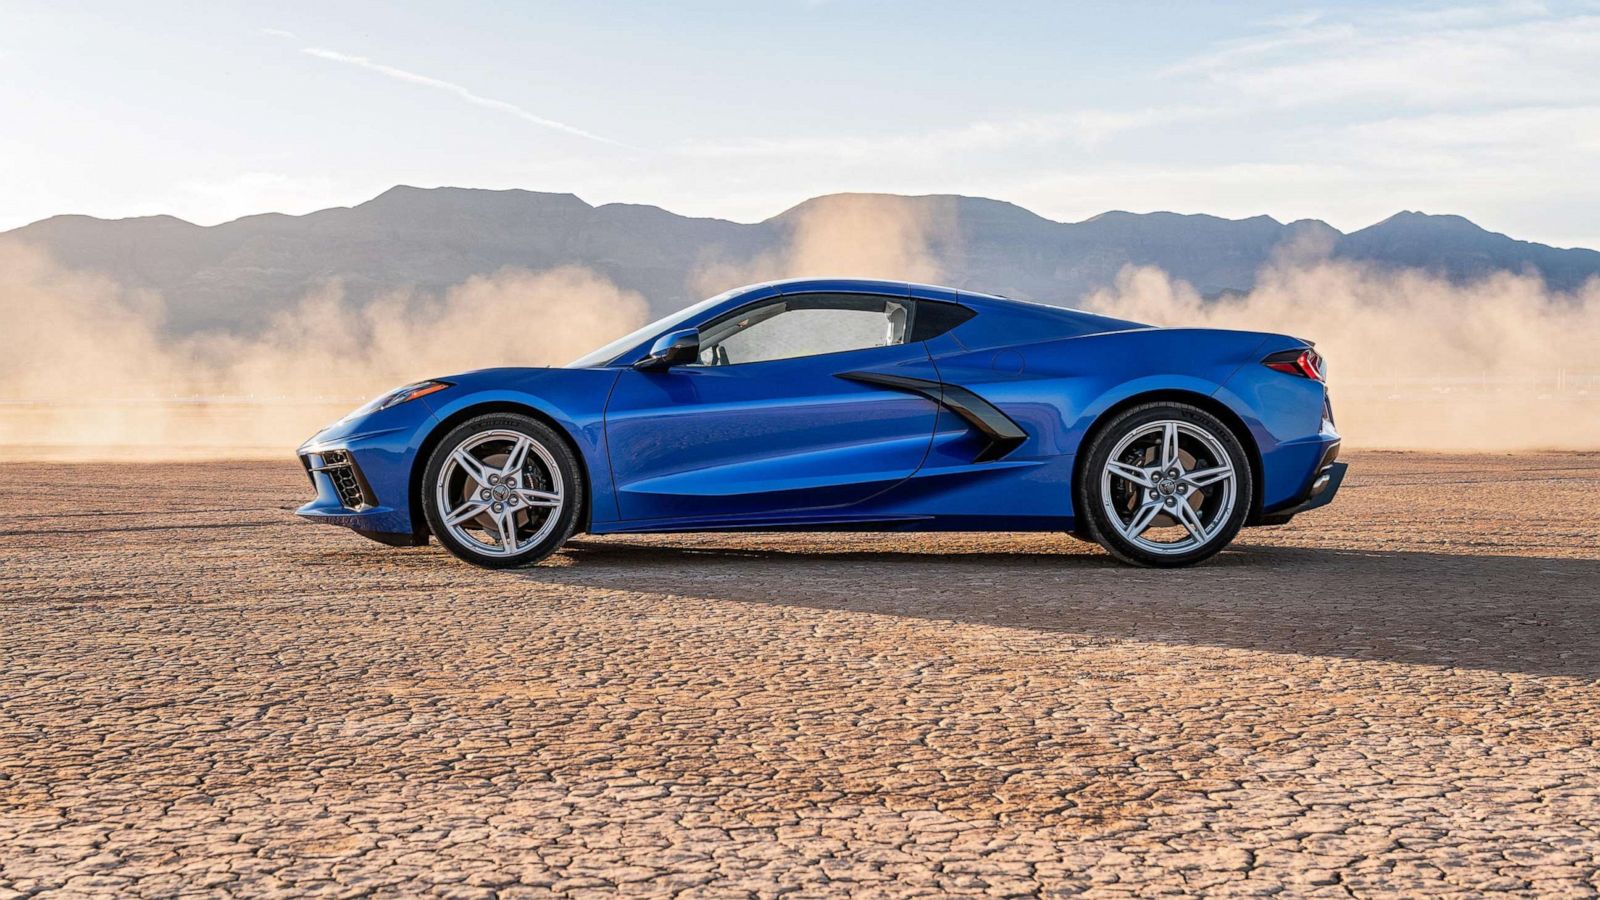 General Motors unveils its new Corvette Stingray